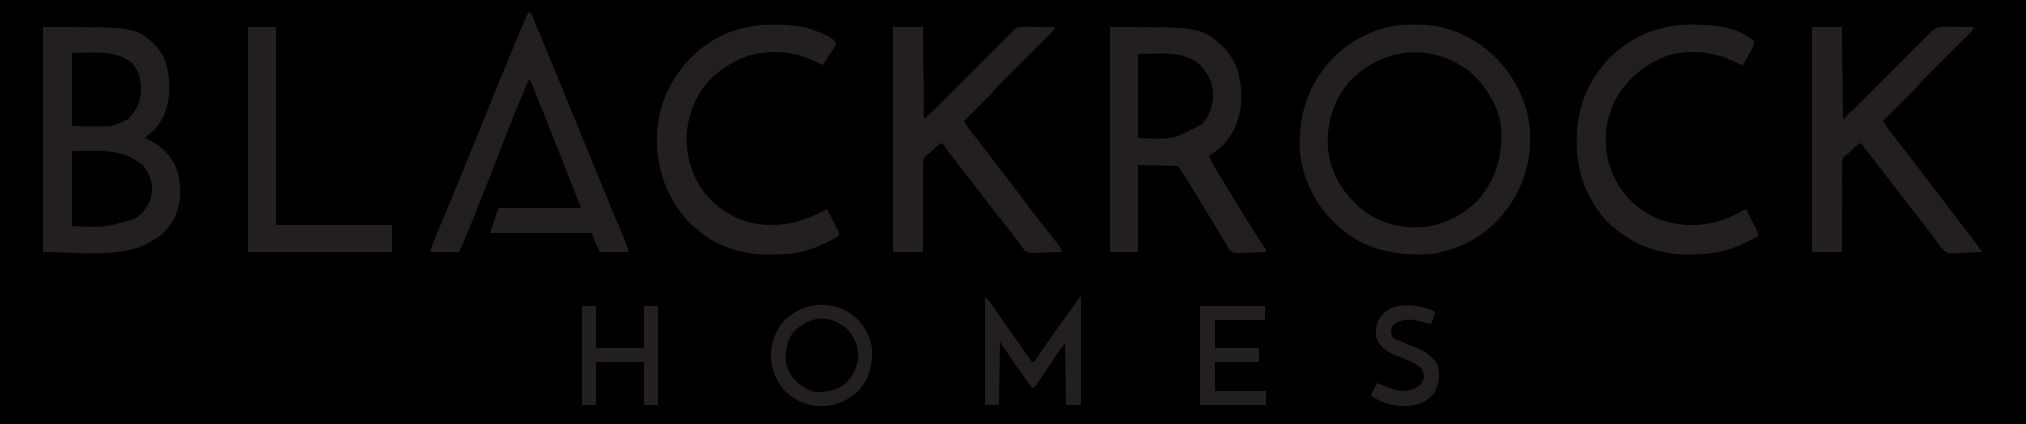 Blackrock Homes